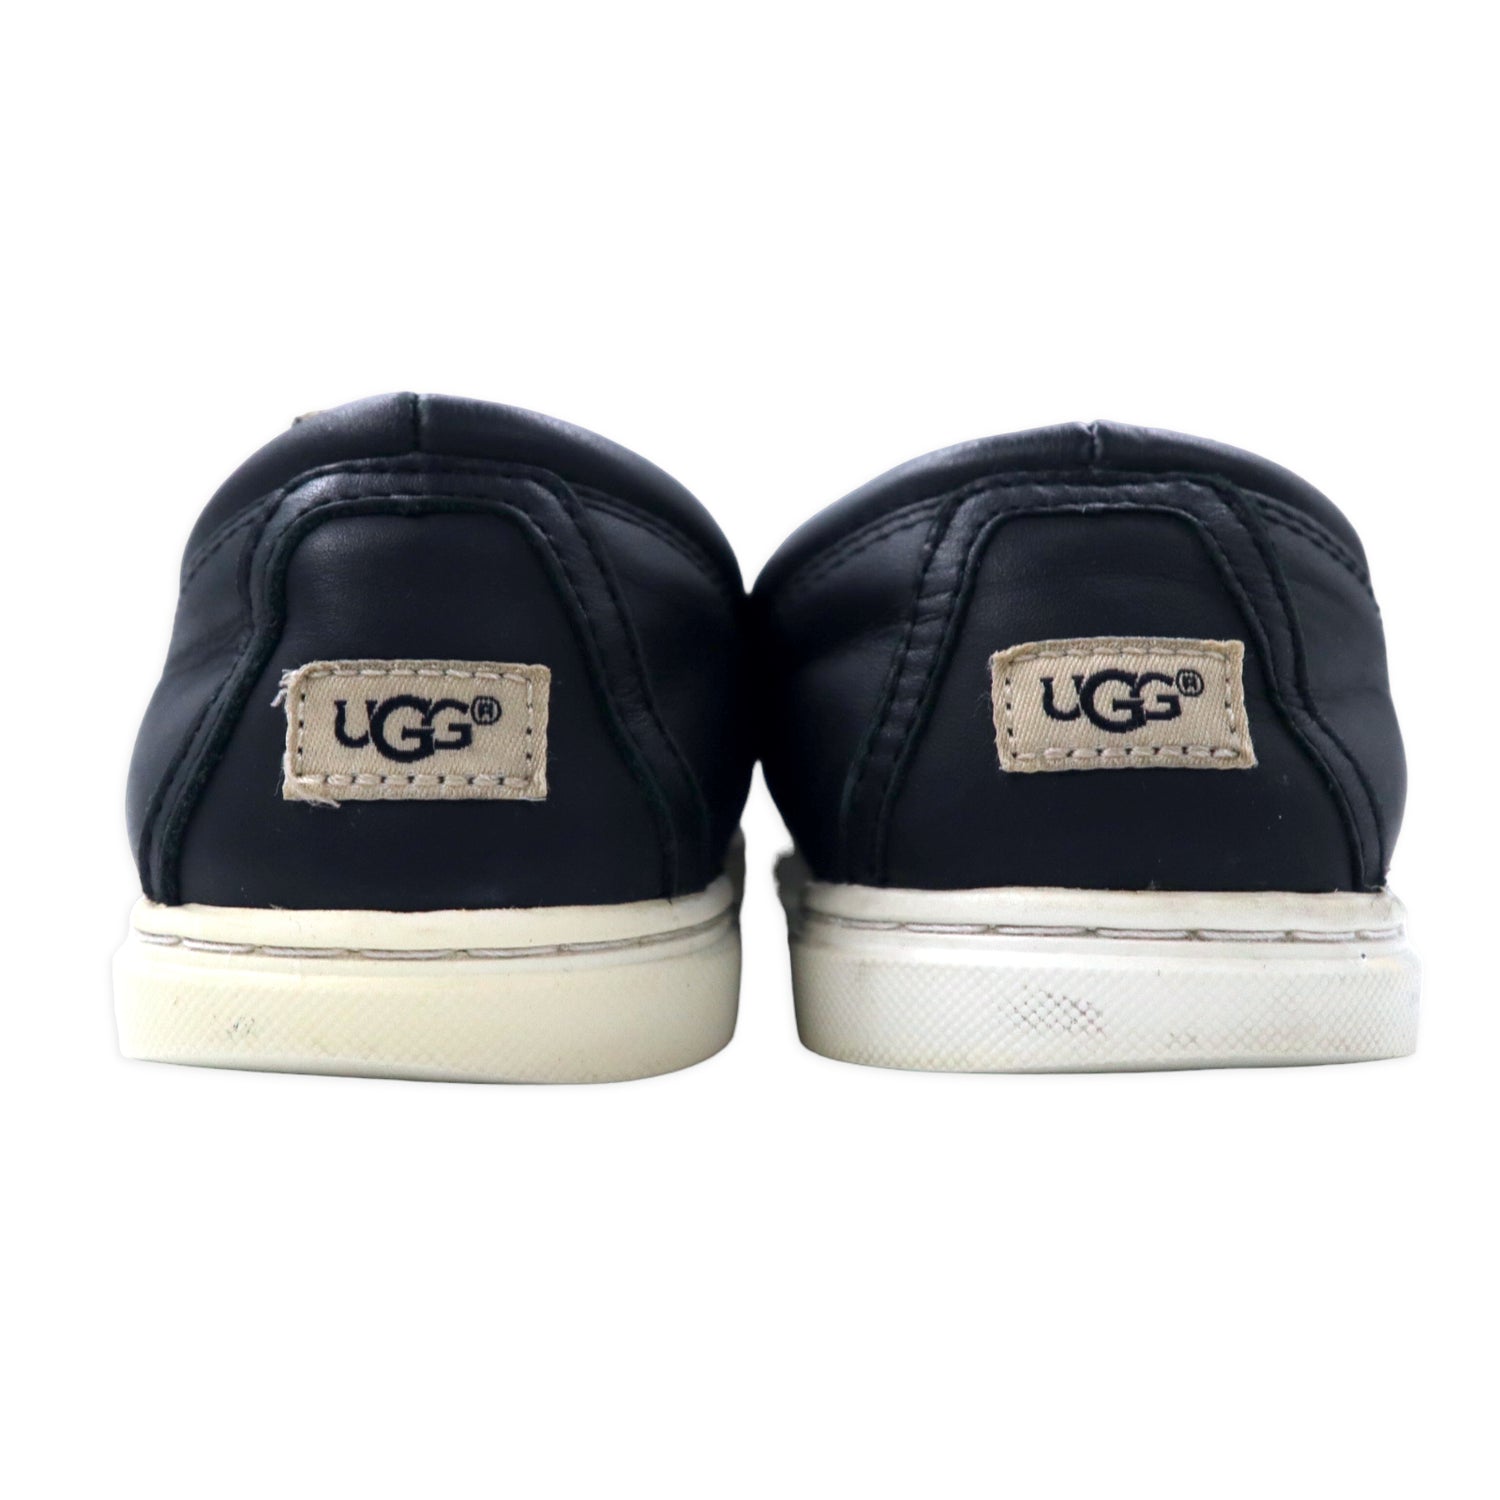 UGG Leather Slippon Sneakers US7 Black Fierce Black Leather Slip on  Sneakers 1093129